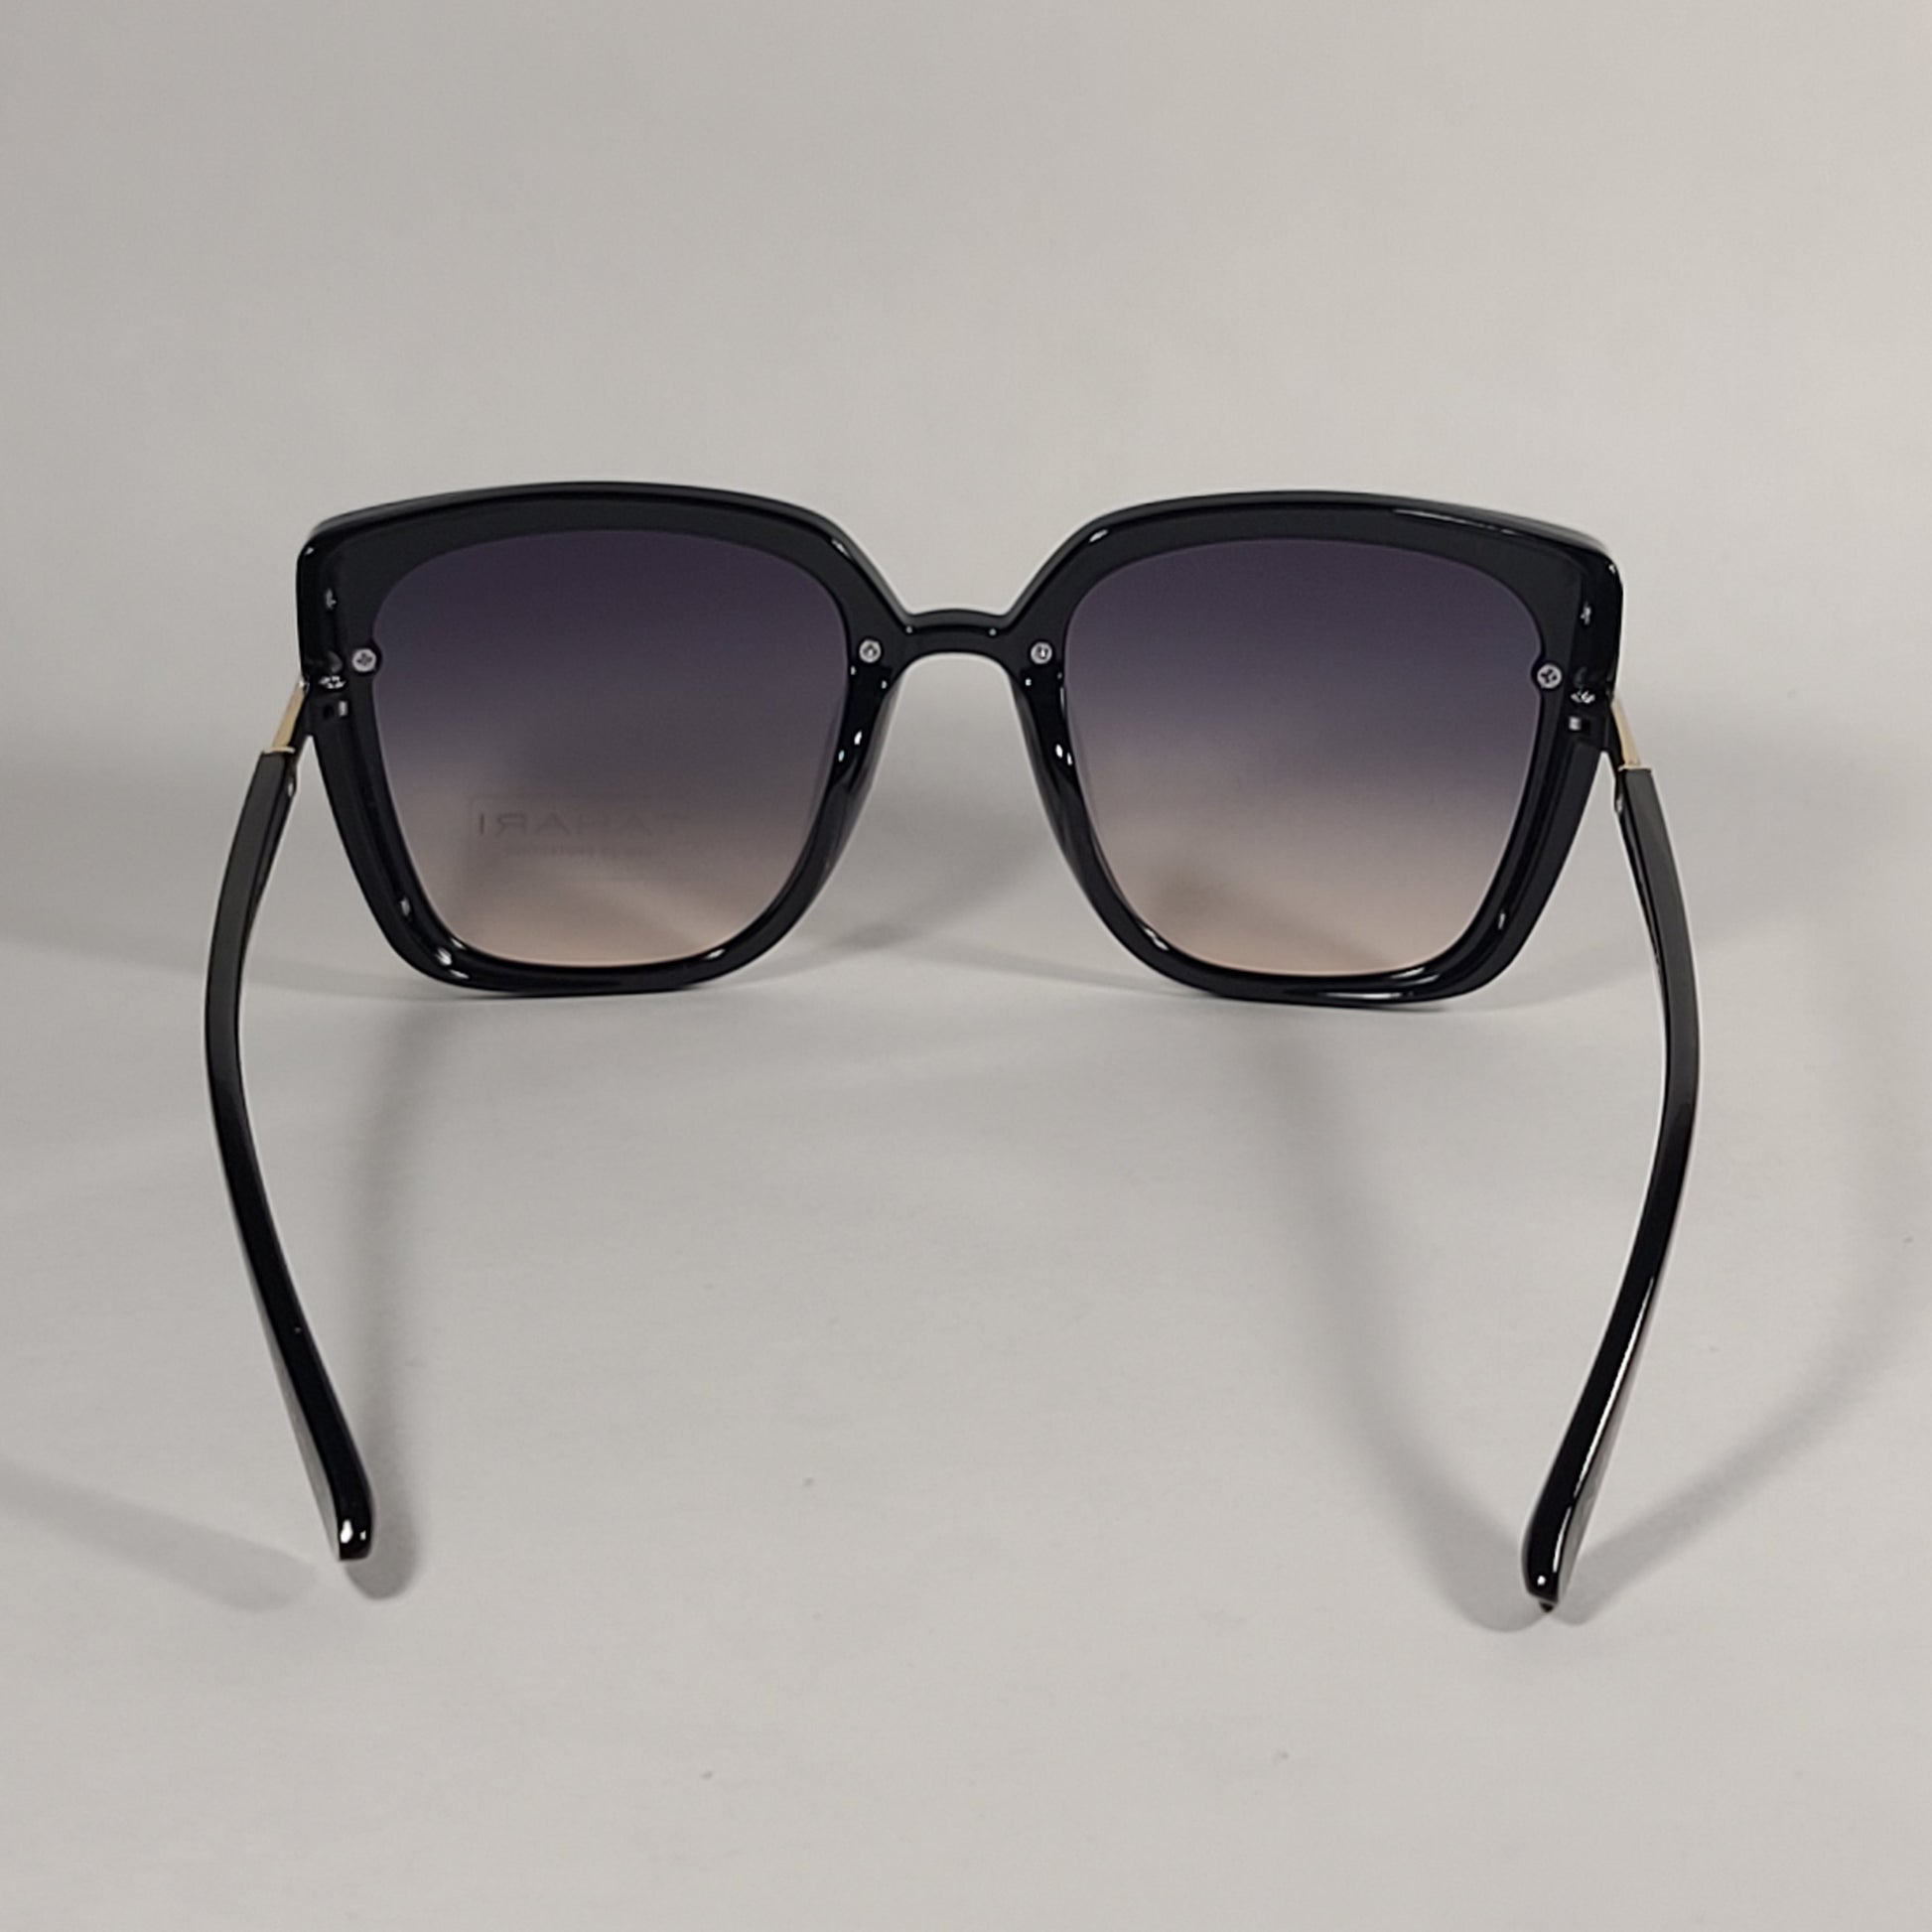 Tahari Cat Eye Square Sunglasses Shiny Black Frame Gray Smoke Gradient Lens TH769 OX - Sunglasses